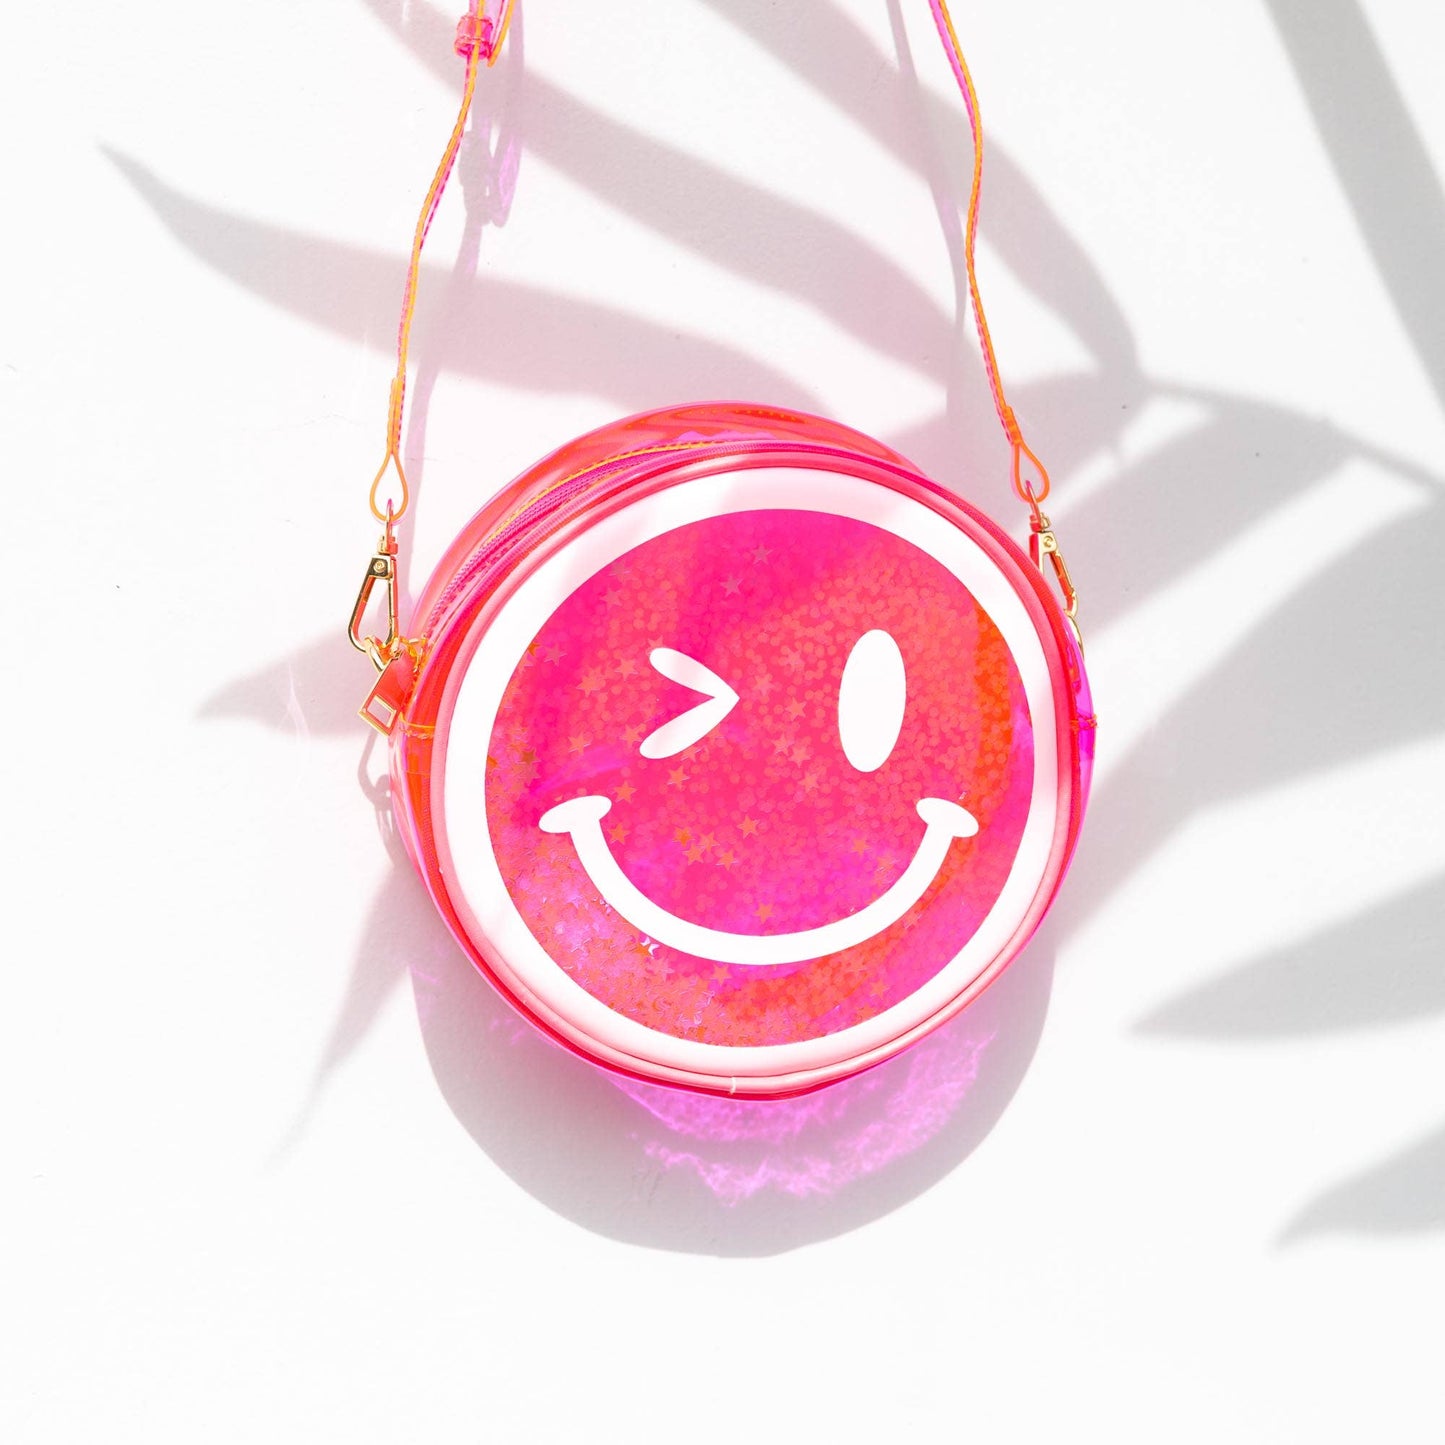 Bewaltz - NEW! Jelly Handbag - Pink Winky Face 😉